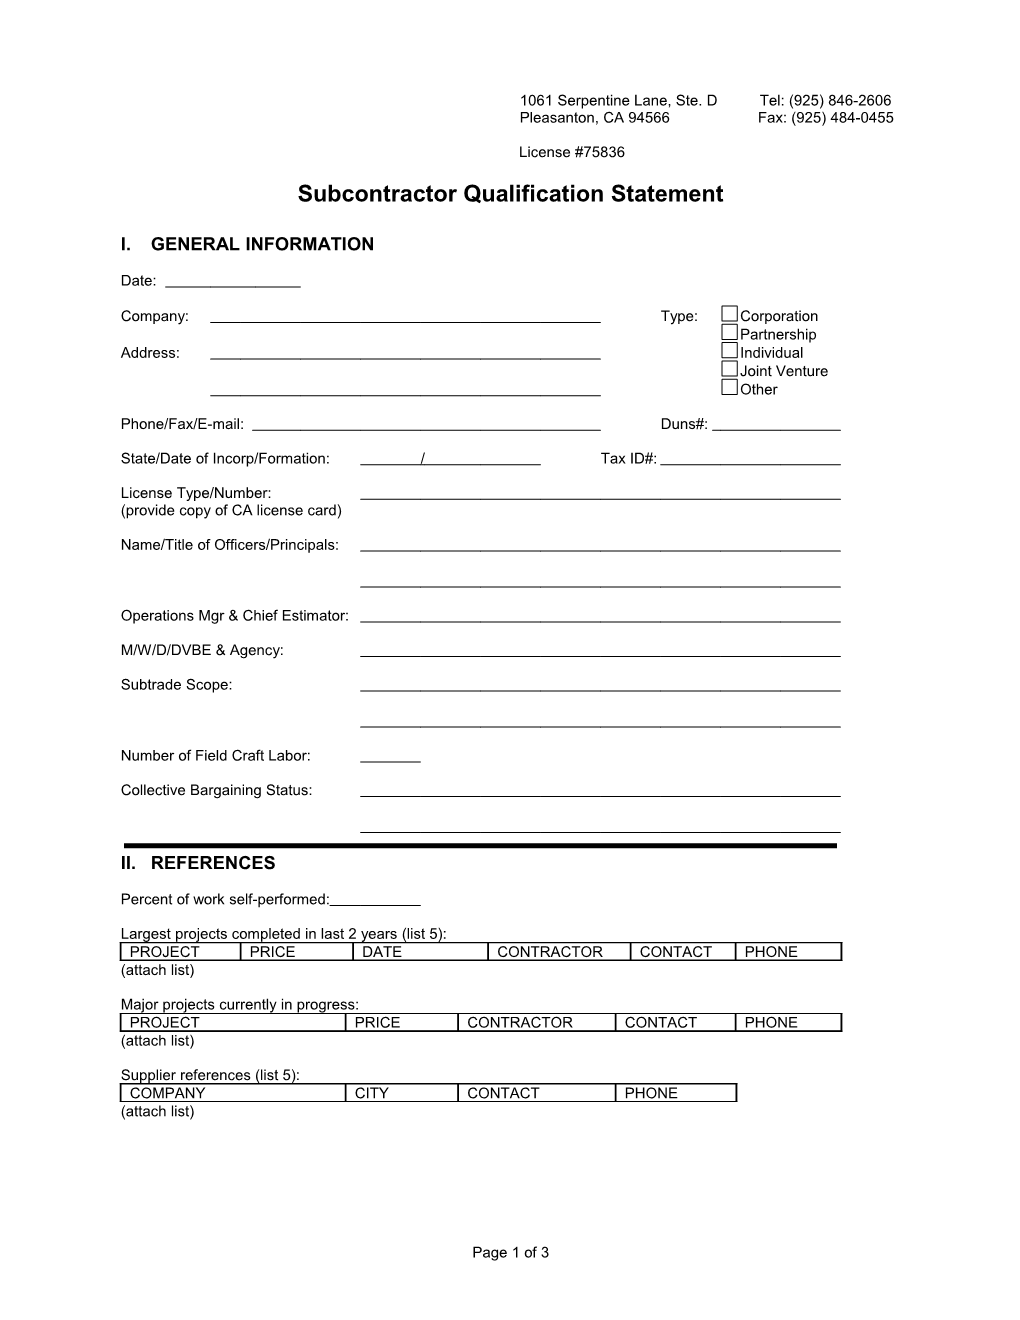 Subcontractor Qualification Statement